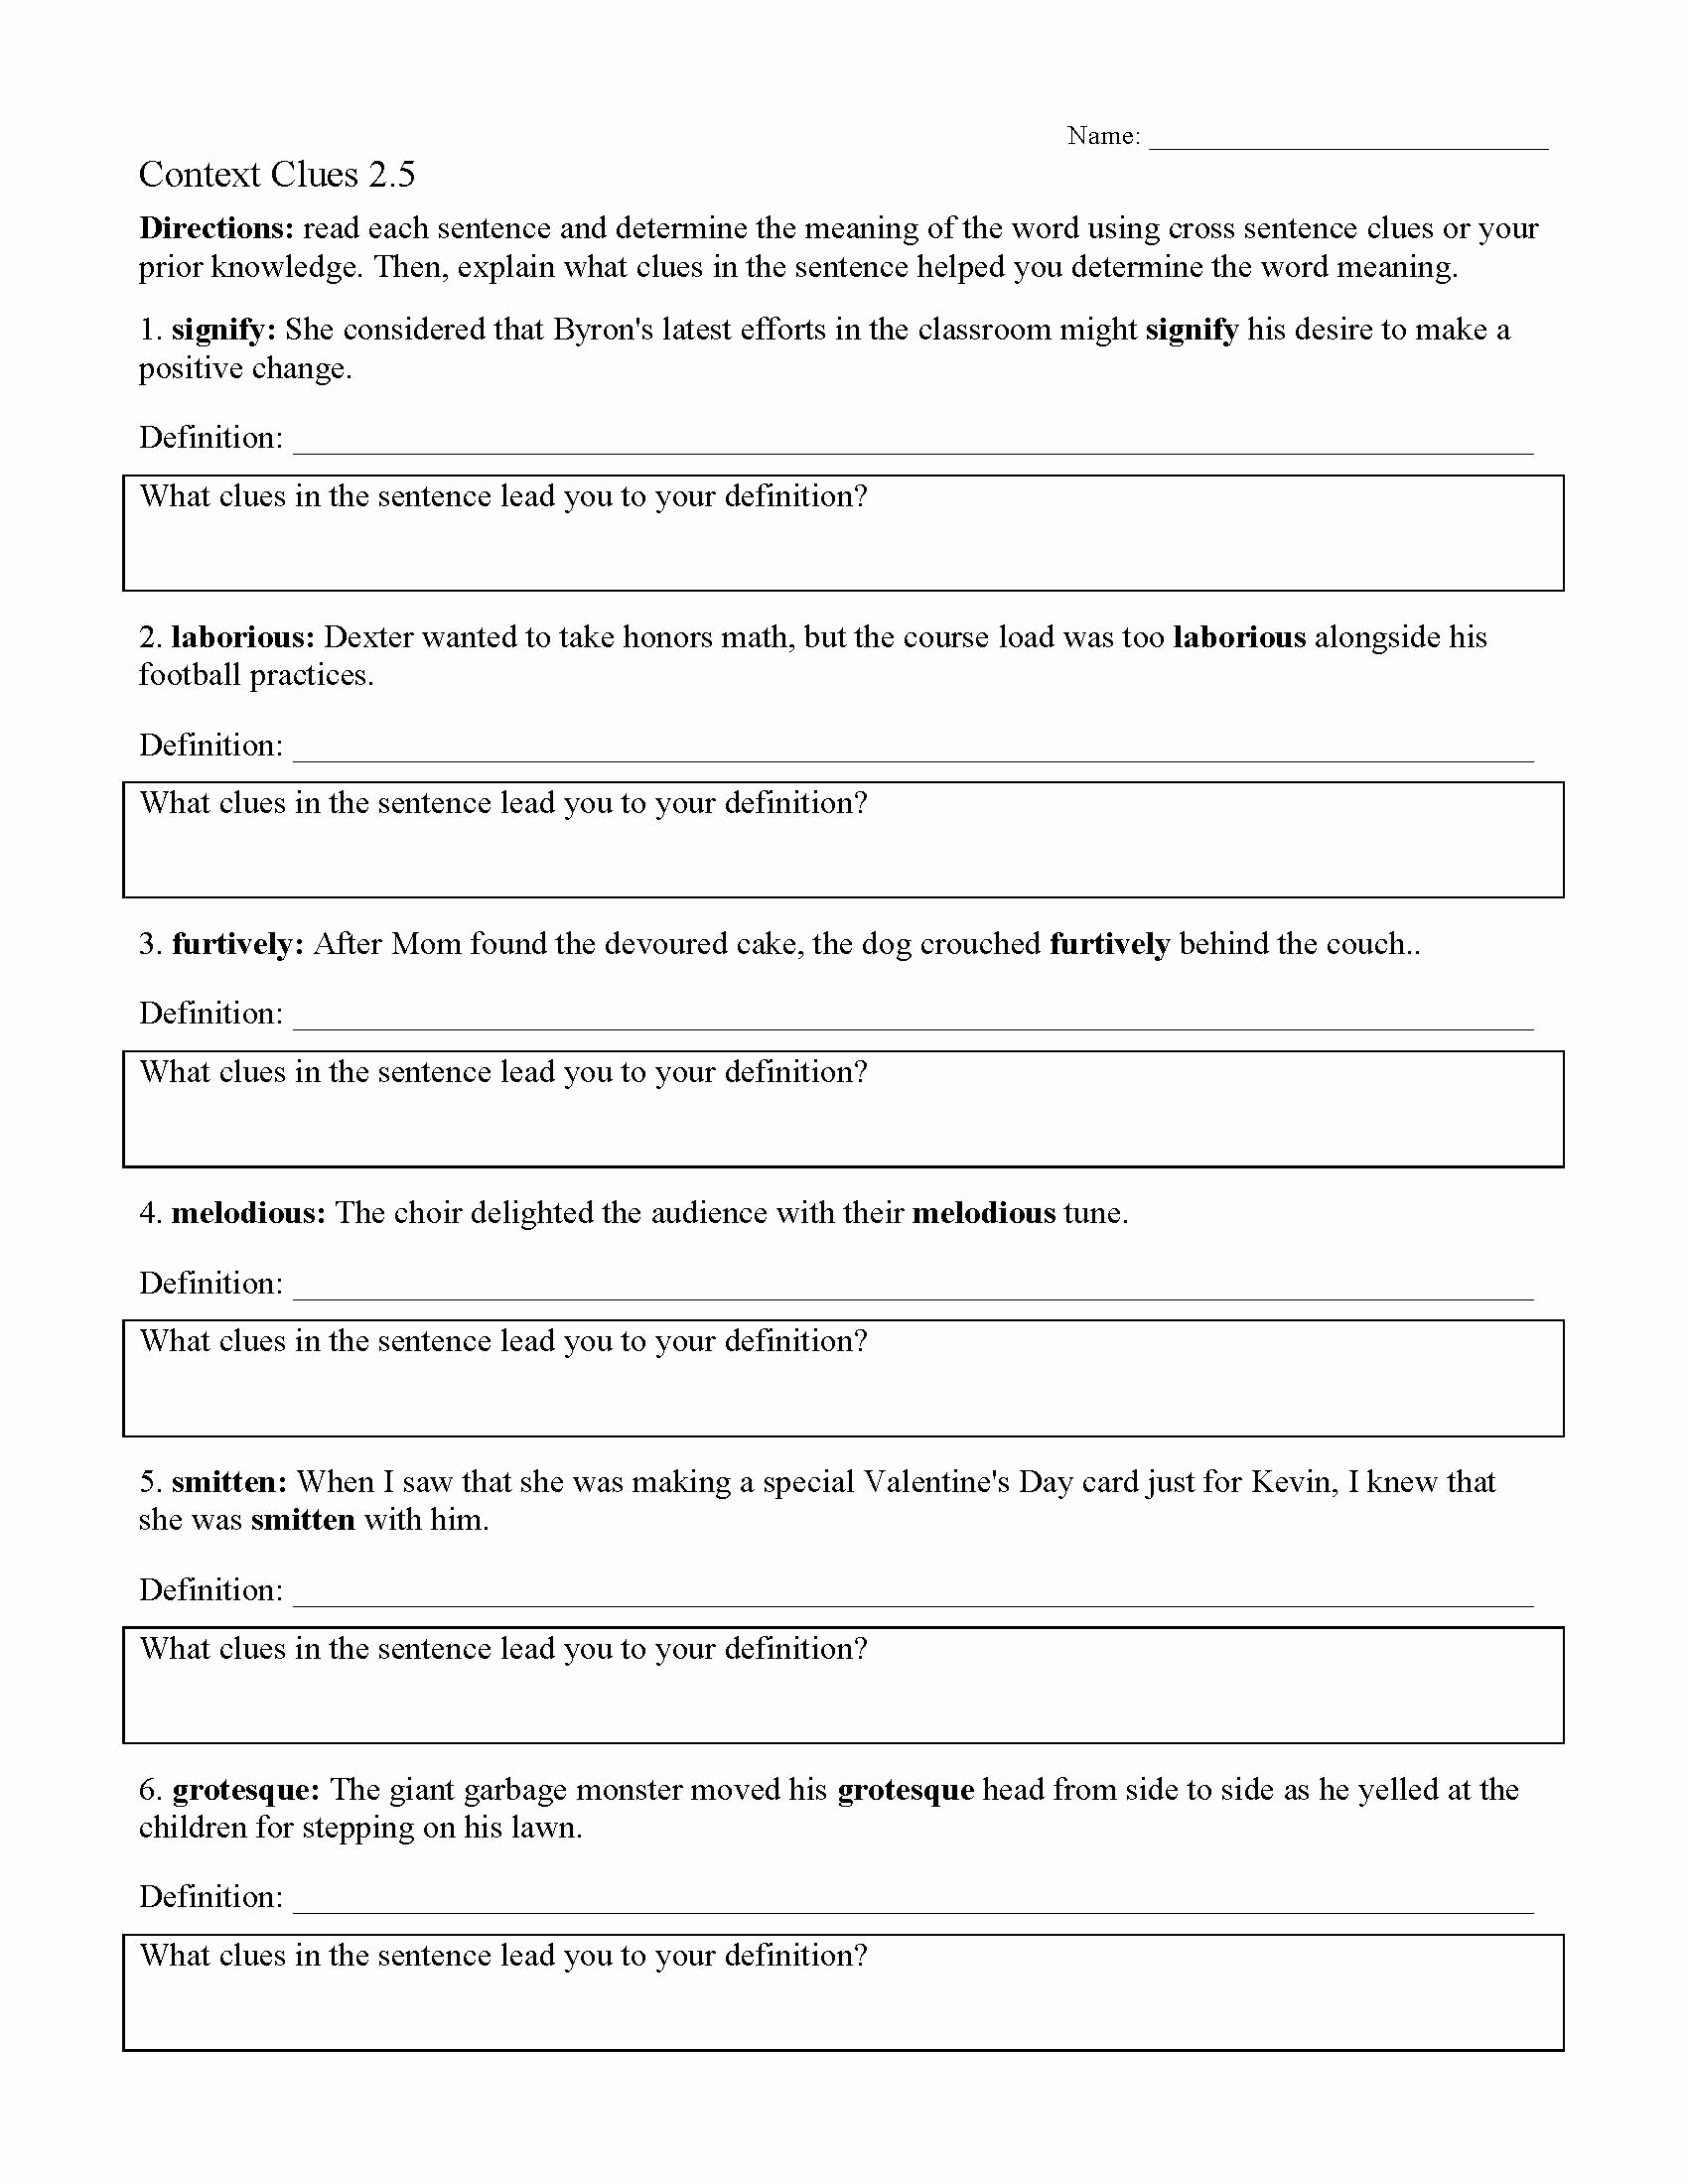 Informational Text Worksheets Middle School Best Of Informational Text Worksheets Middle School – Worksheet